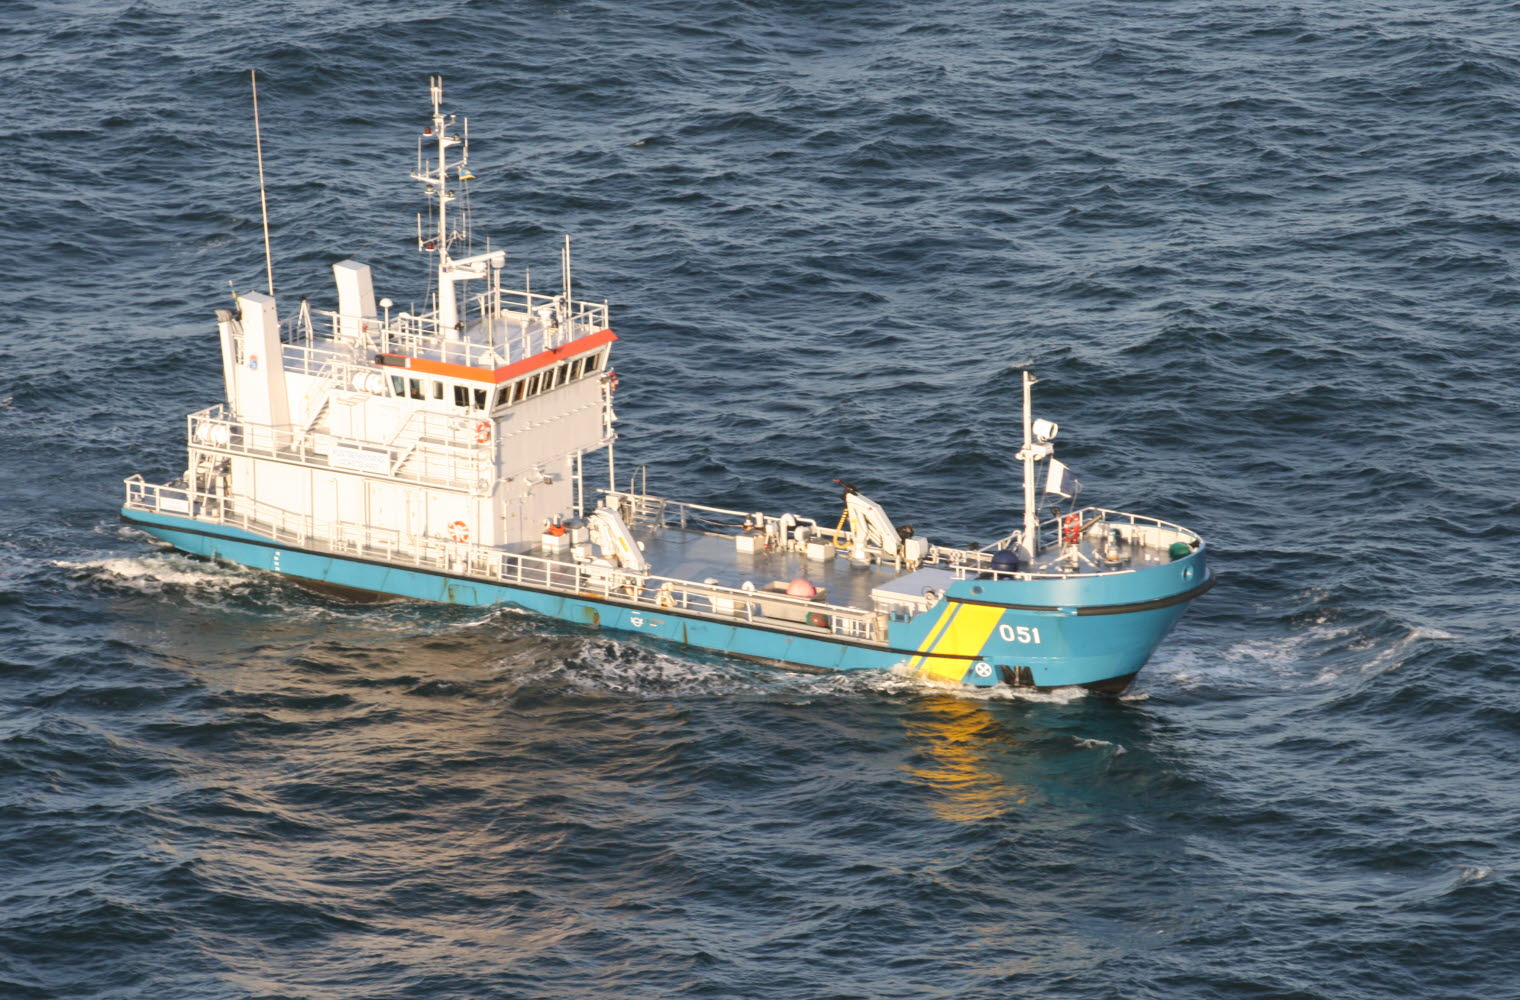 Environmental protection vessel KBV 051